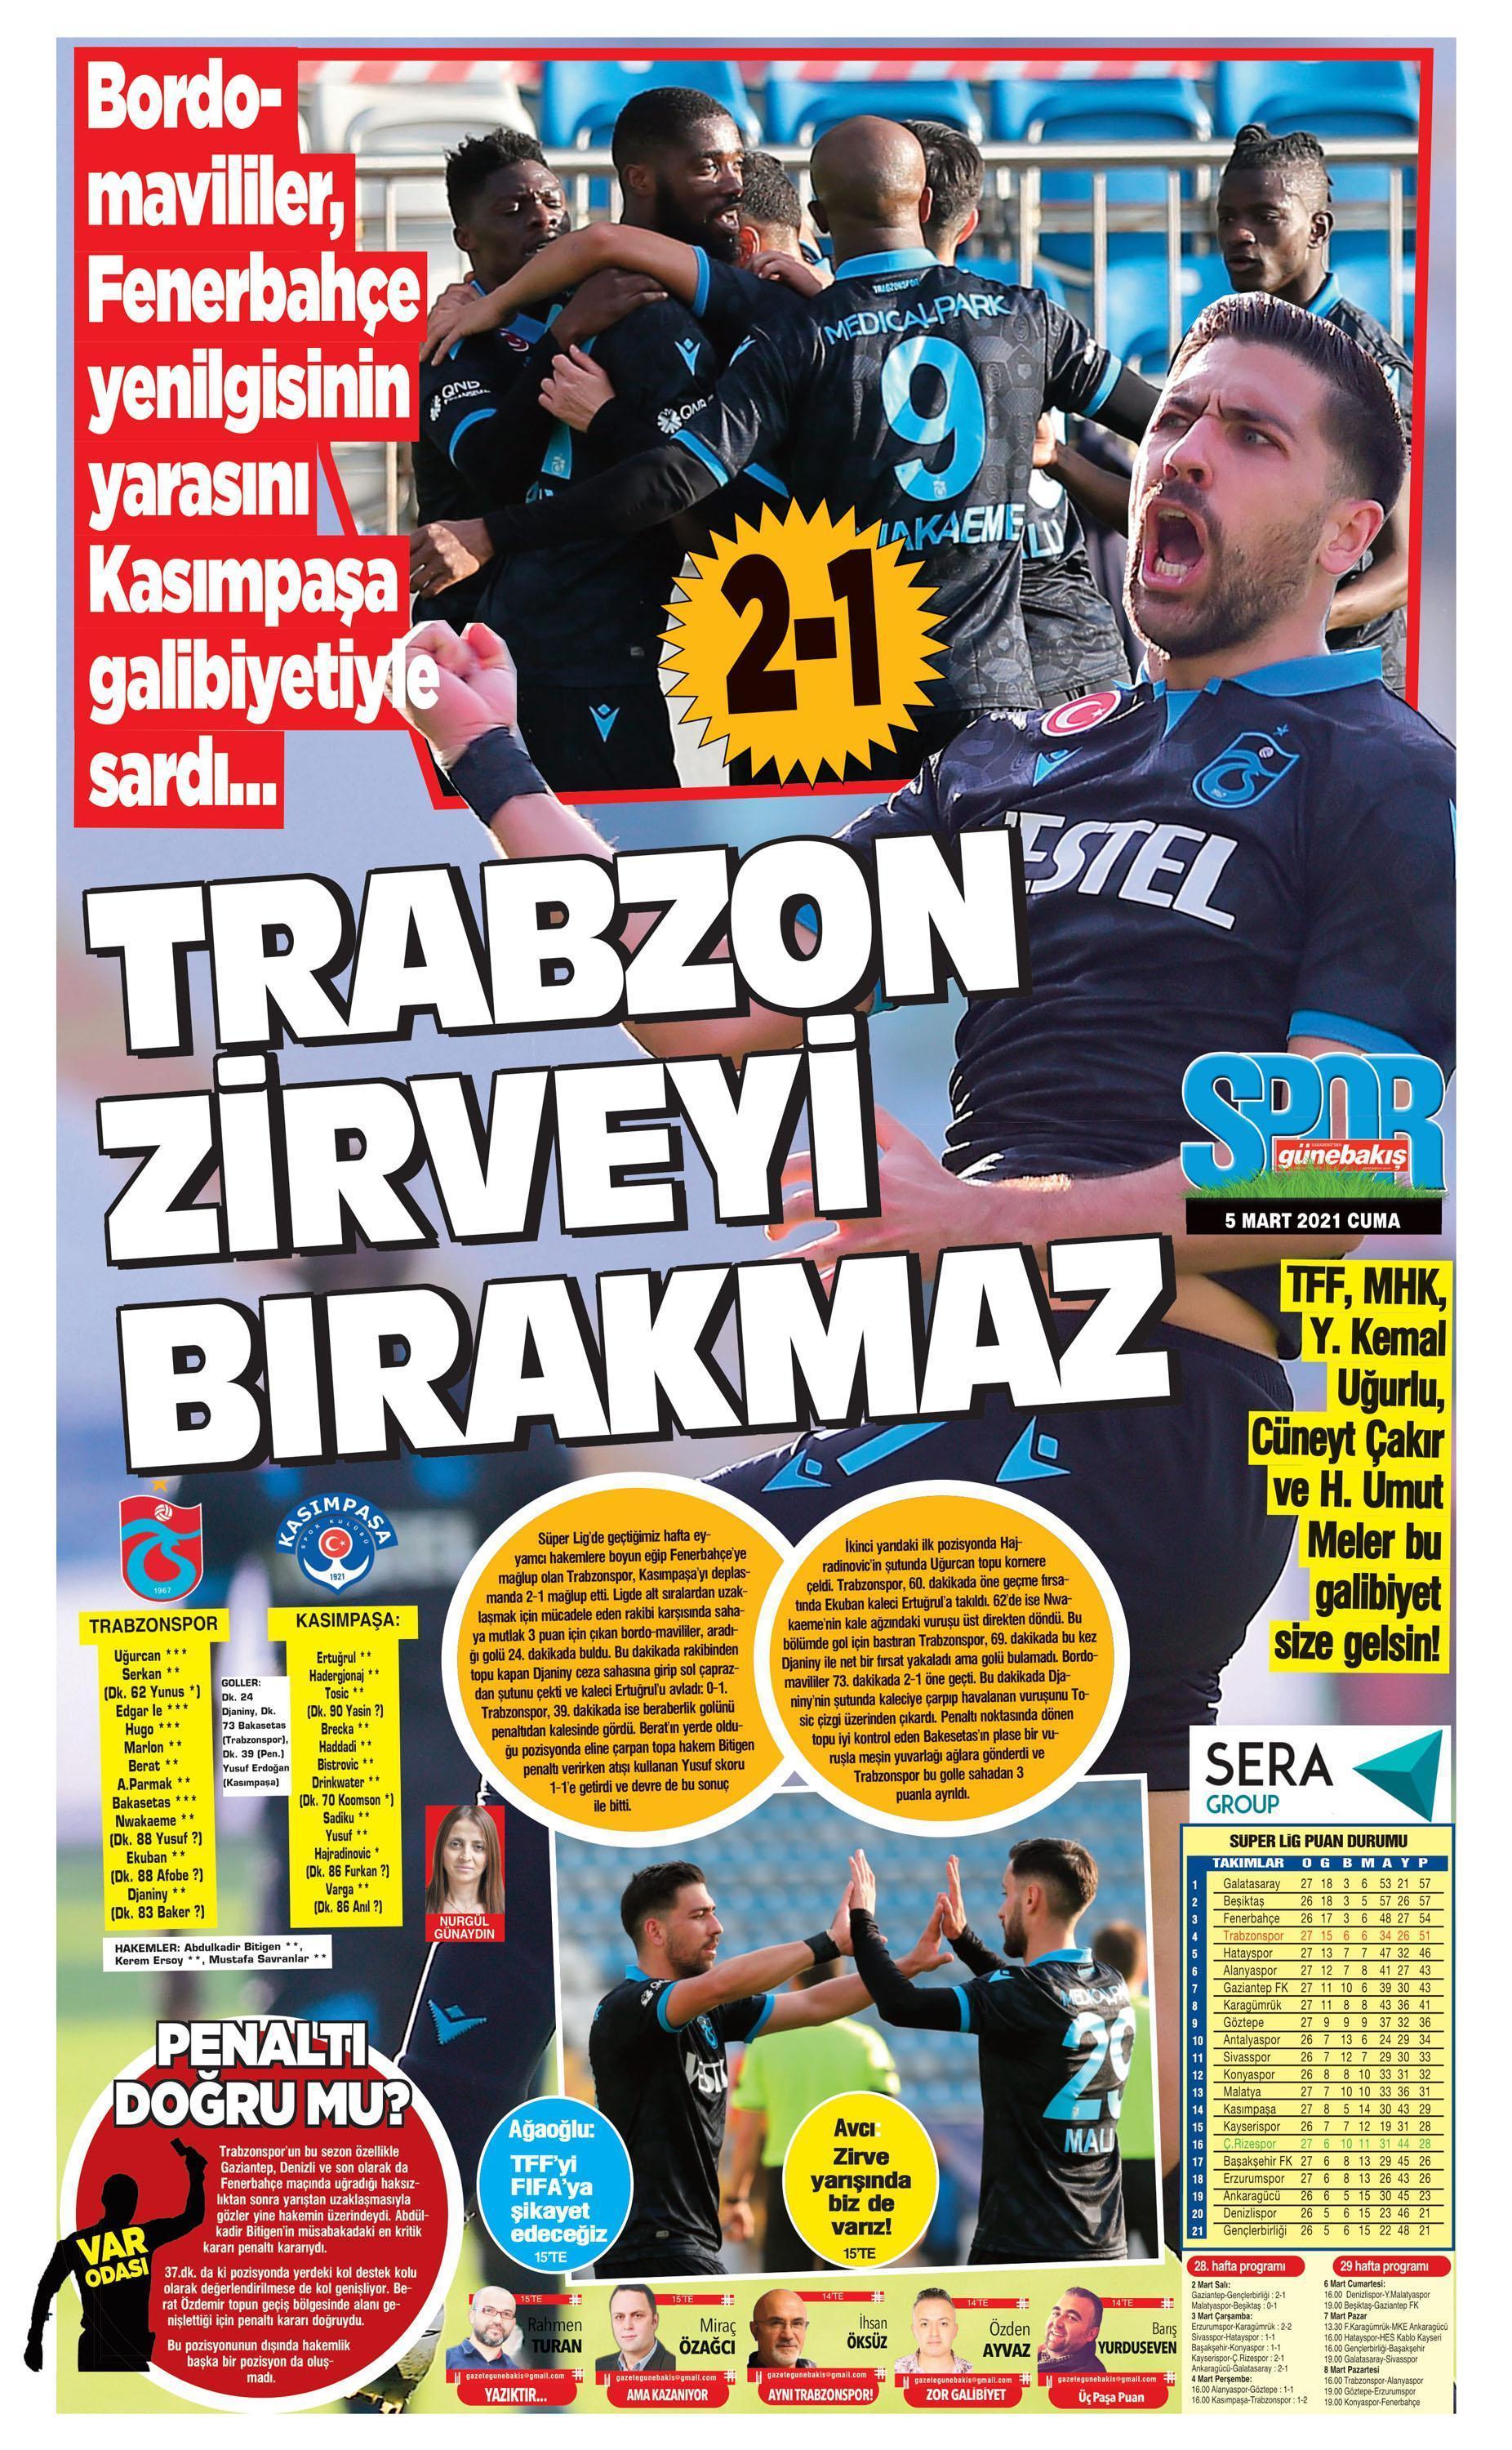 Yerel basından Trabzonspora övgü